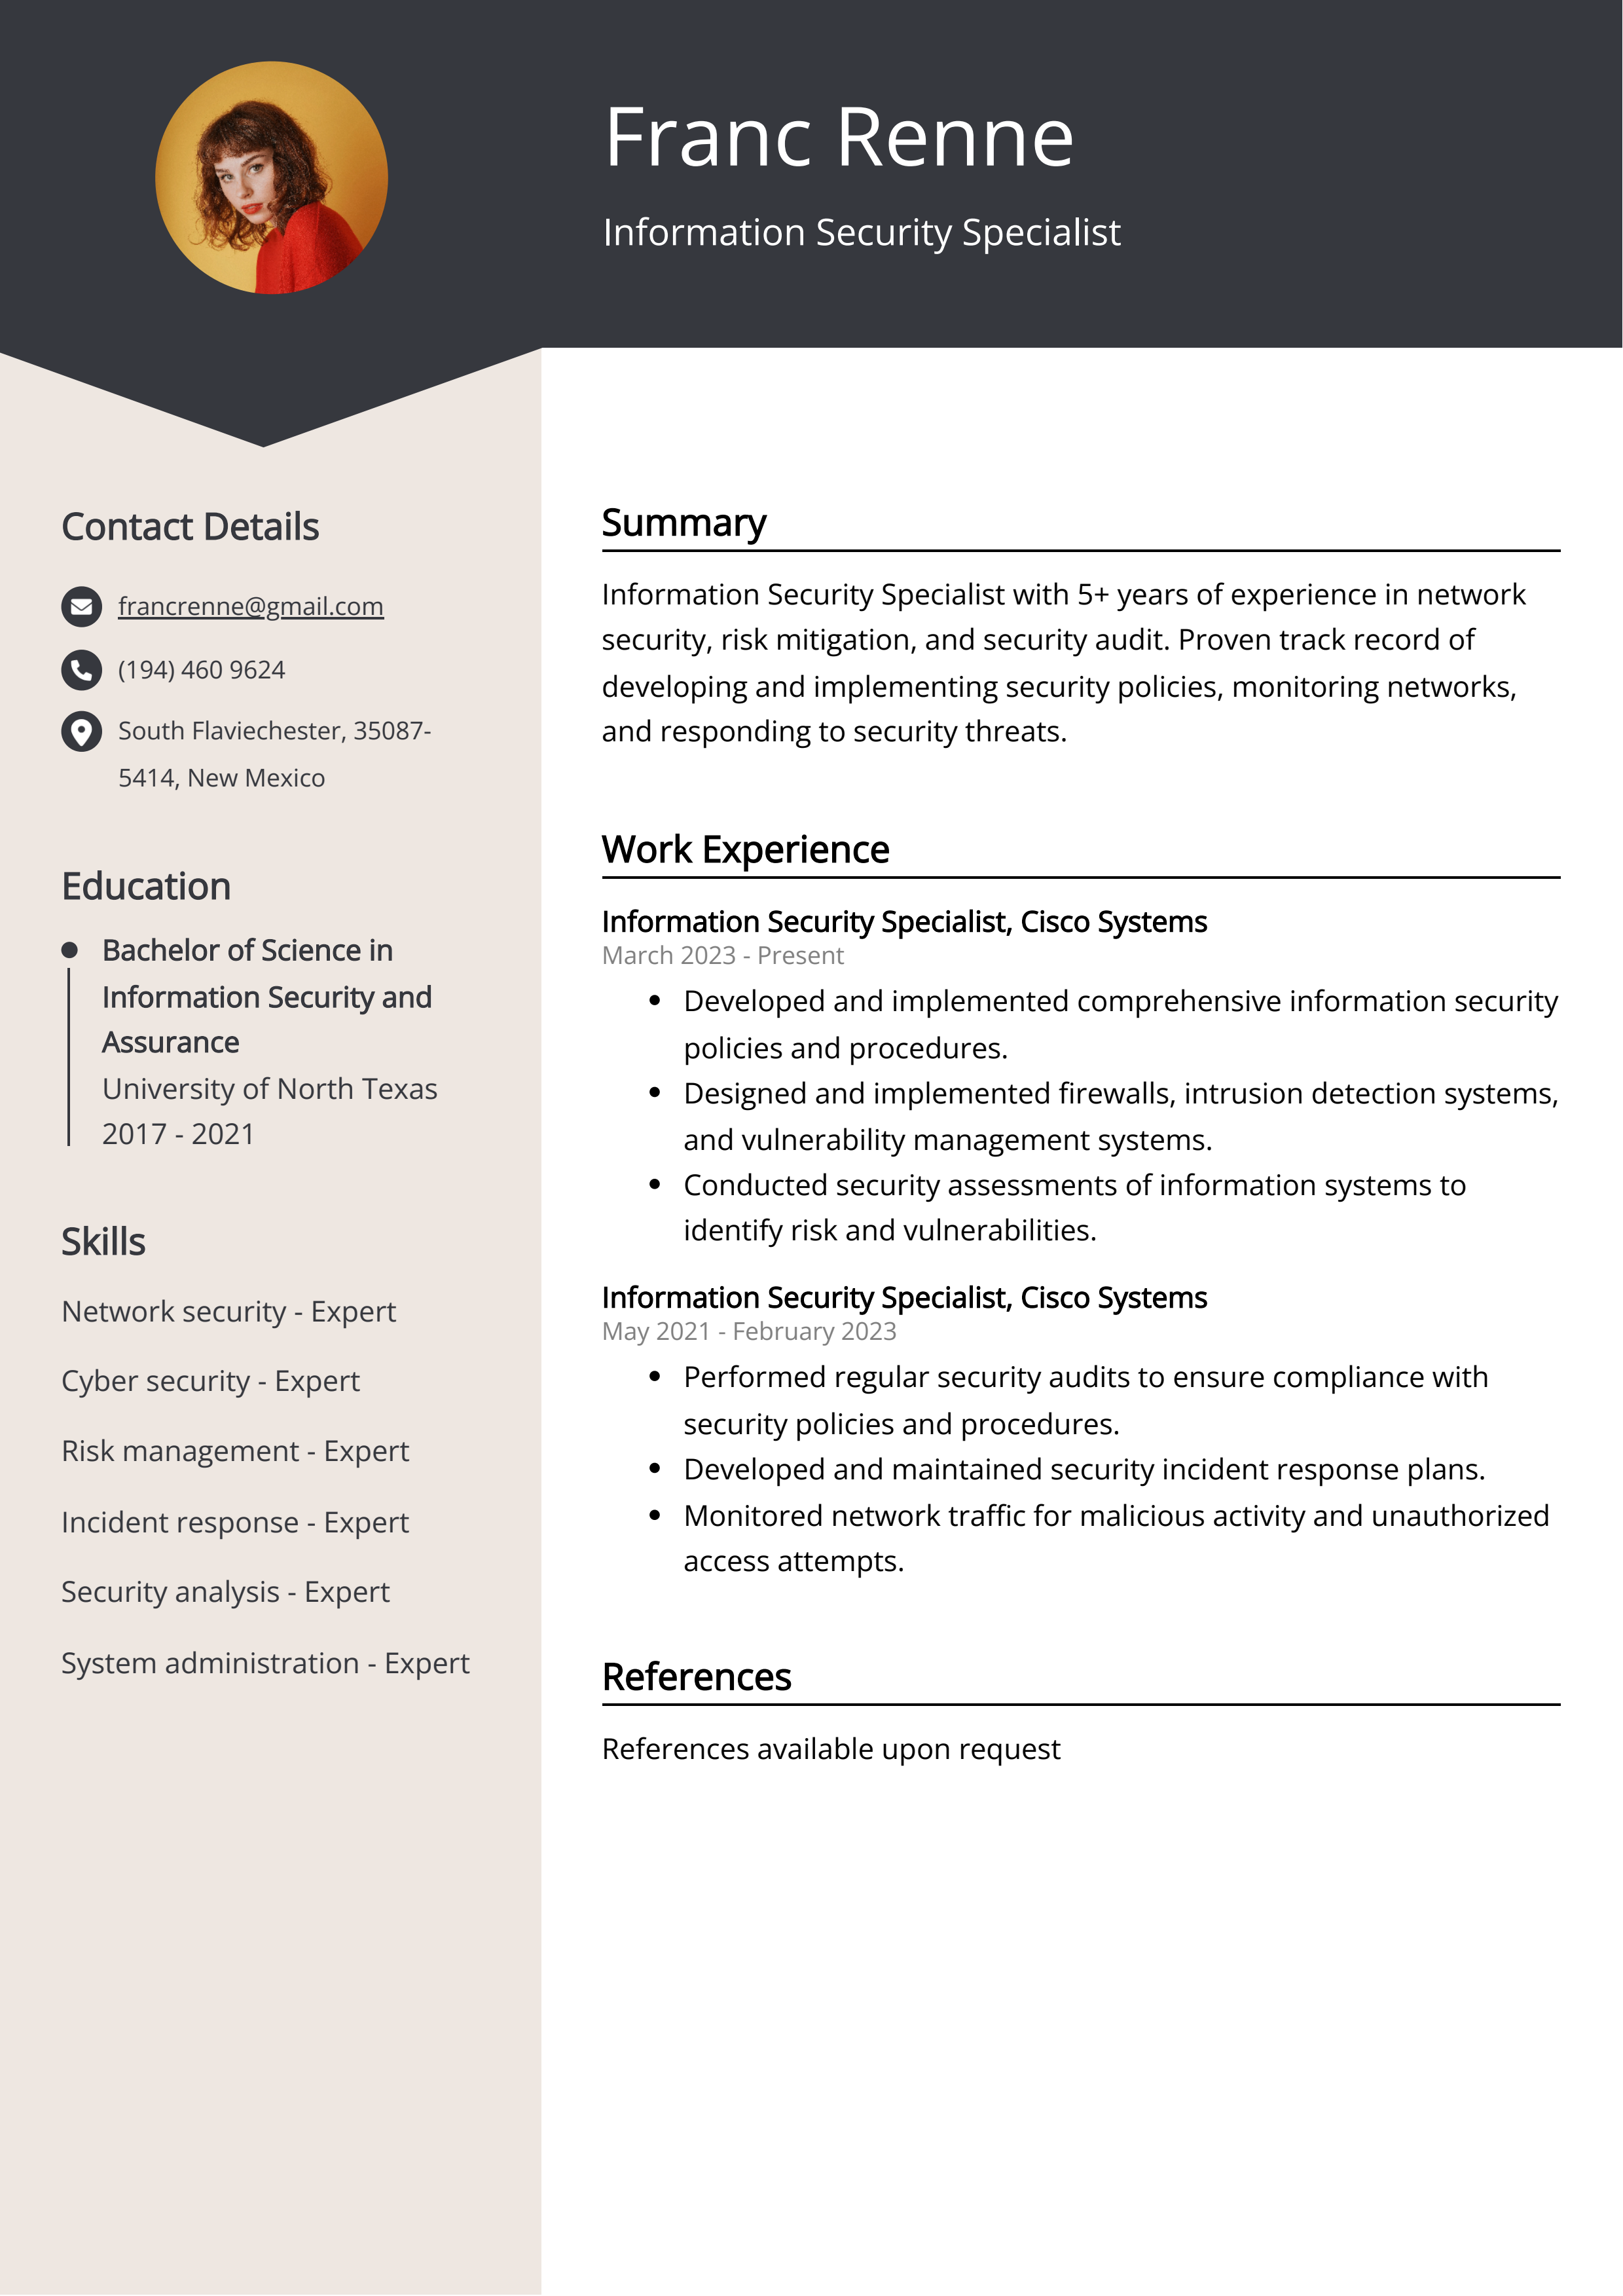 Information Security Specialist CV Example